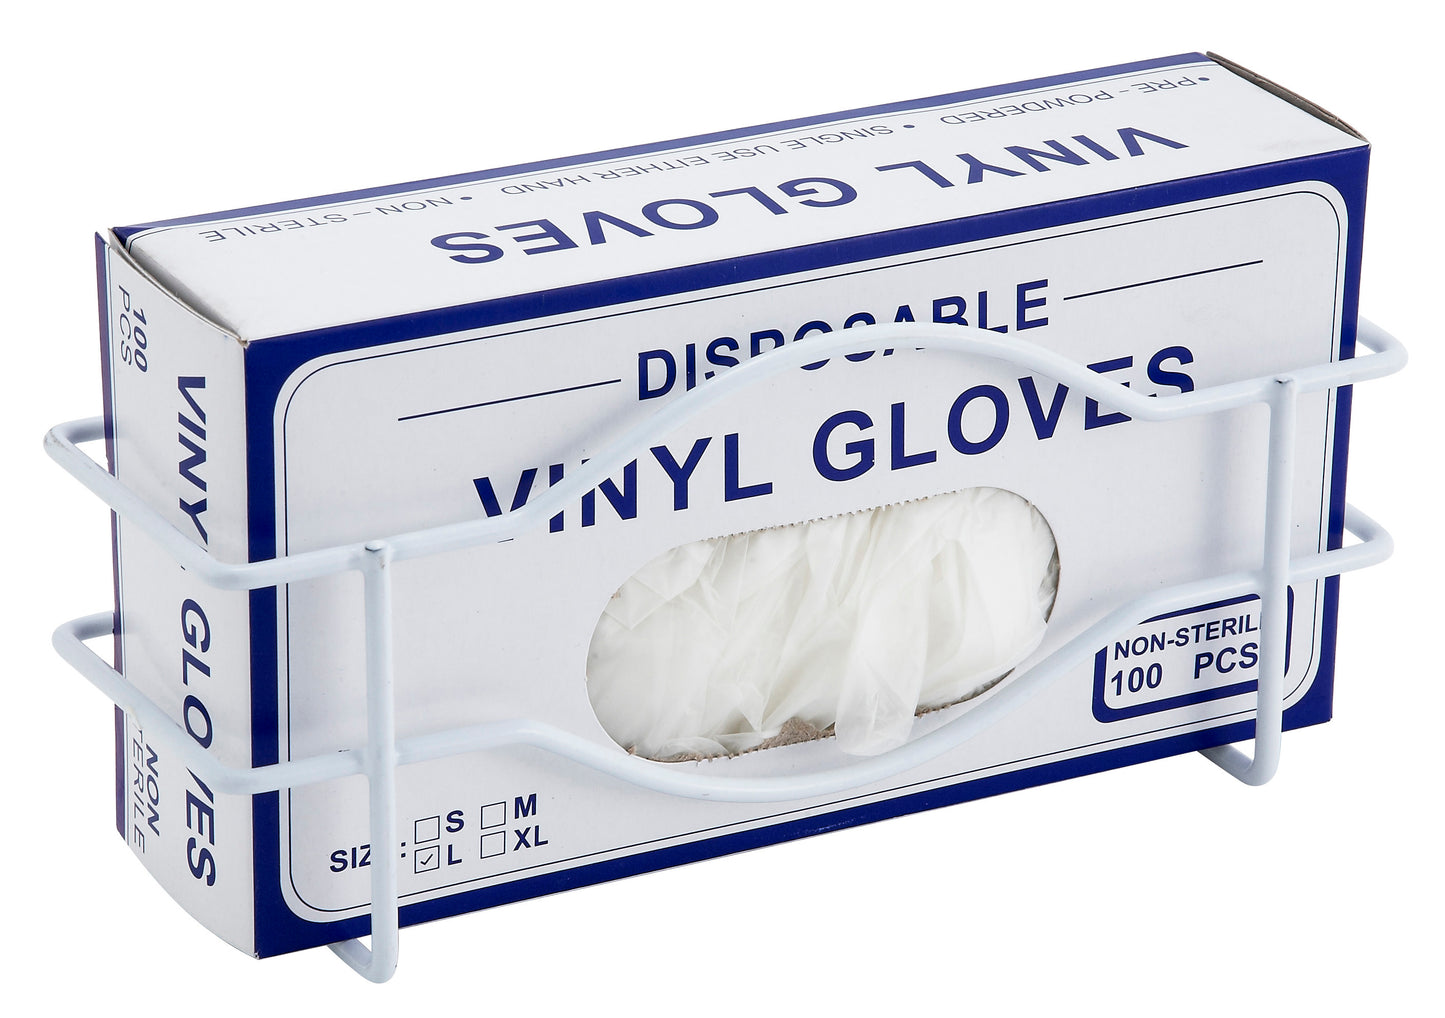 WHW-10 - Glove Box Holder Fits 9-3/4" x 2-7/8" Box